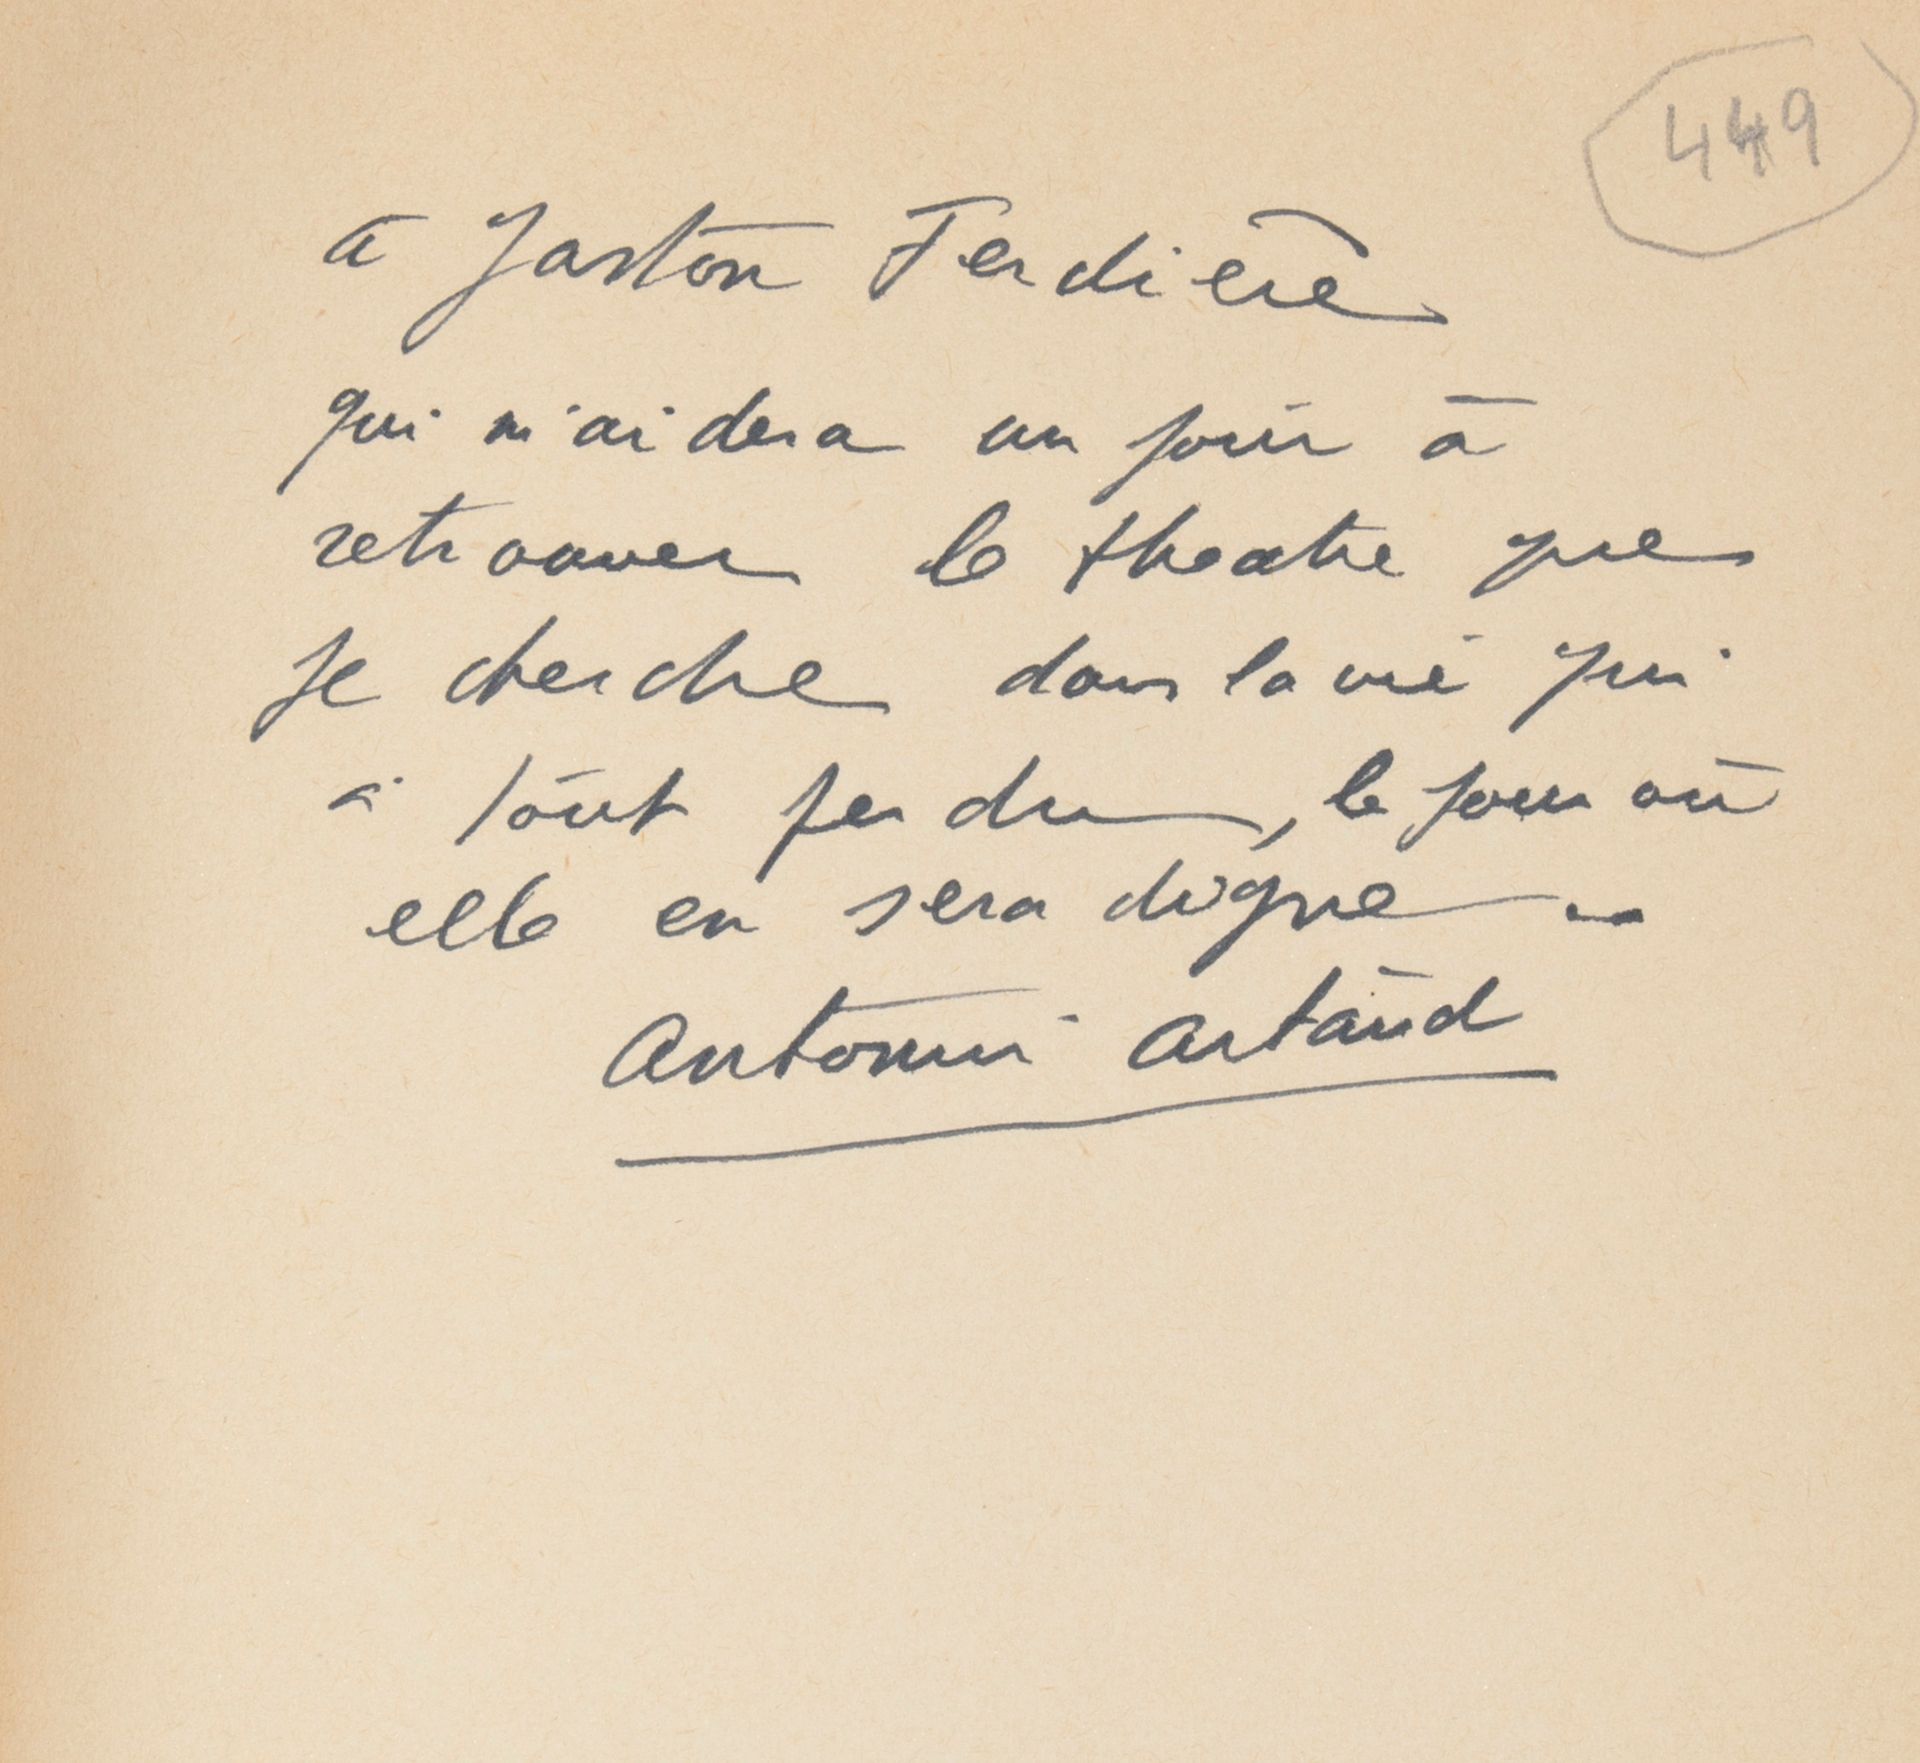 ARTAUD Antonin. 剧院和他的替身。巴黎，NRF，1938年。8英寸平装本。
第一版。
签名的亲笔信："致加斯顿-费迪埃，他将帮助我有一天找到我在寻&hellip;